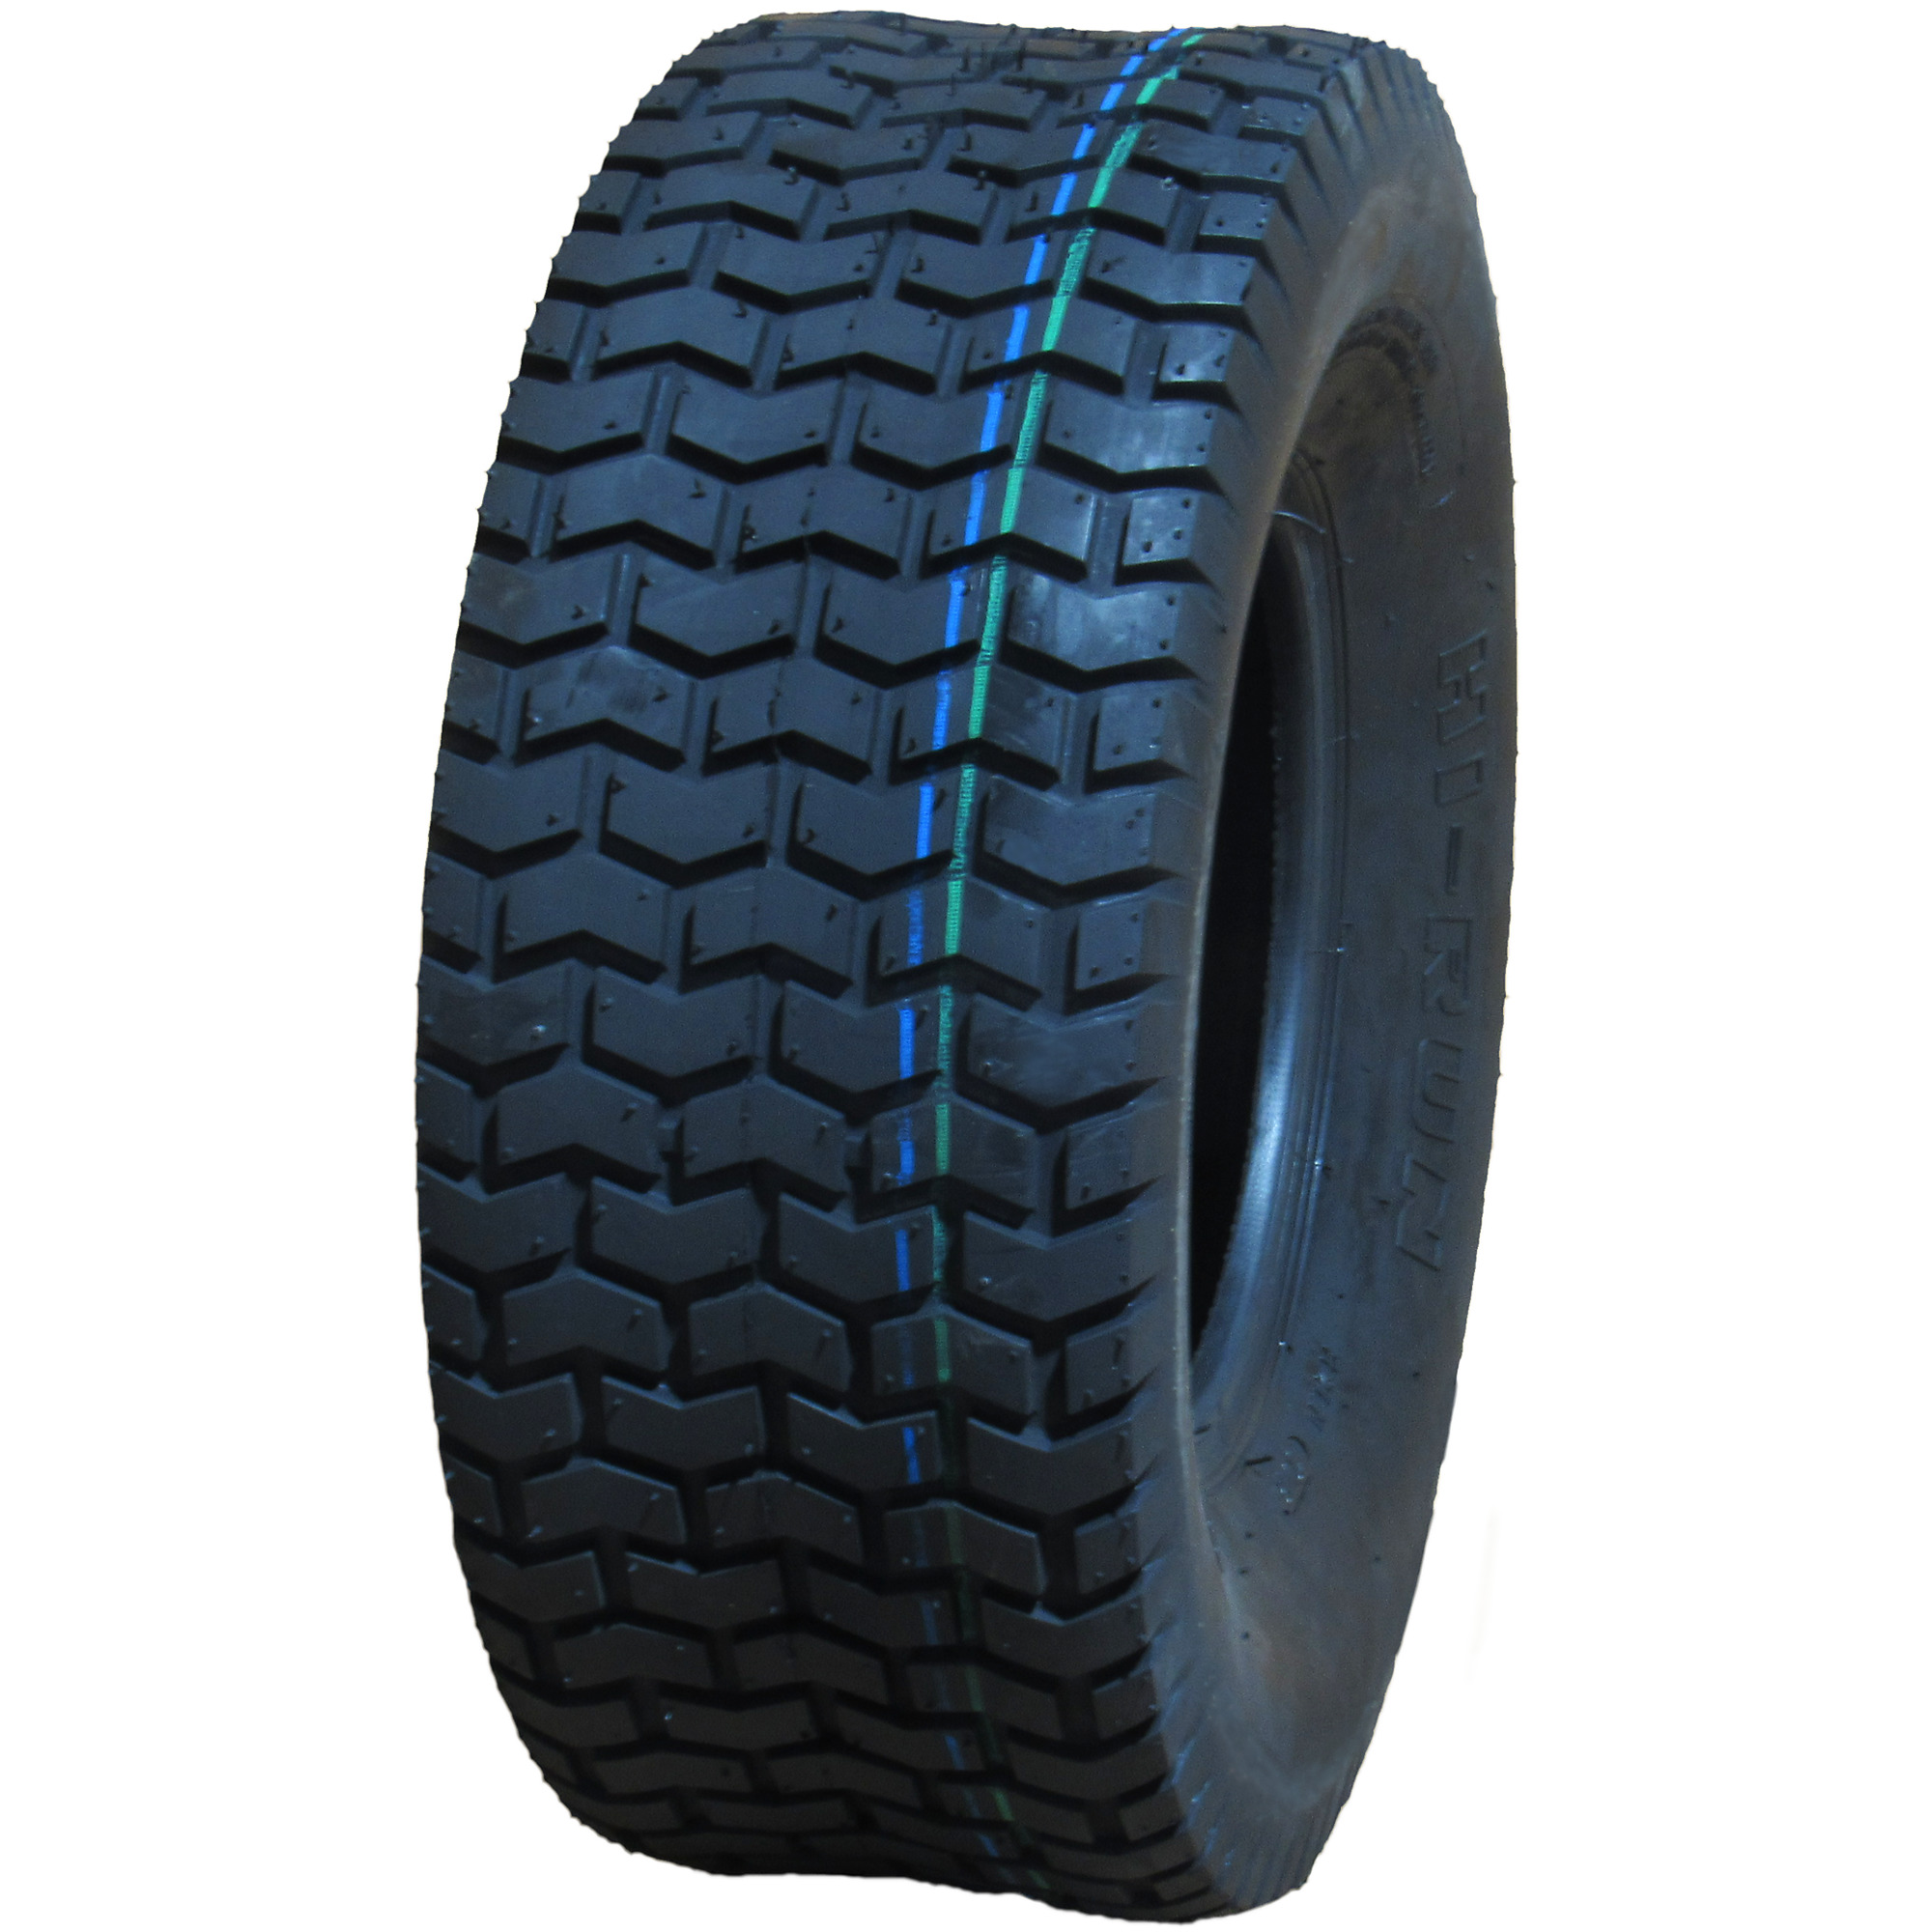 HI-RUN, Lawn Garden Tire, SU12 Turf II, Tire Size 18X6.50-8 Load Range Rating A, Model WD1156